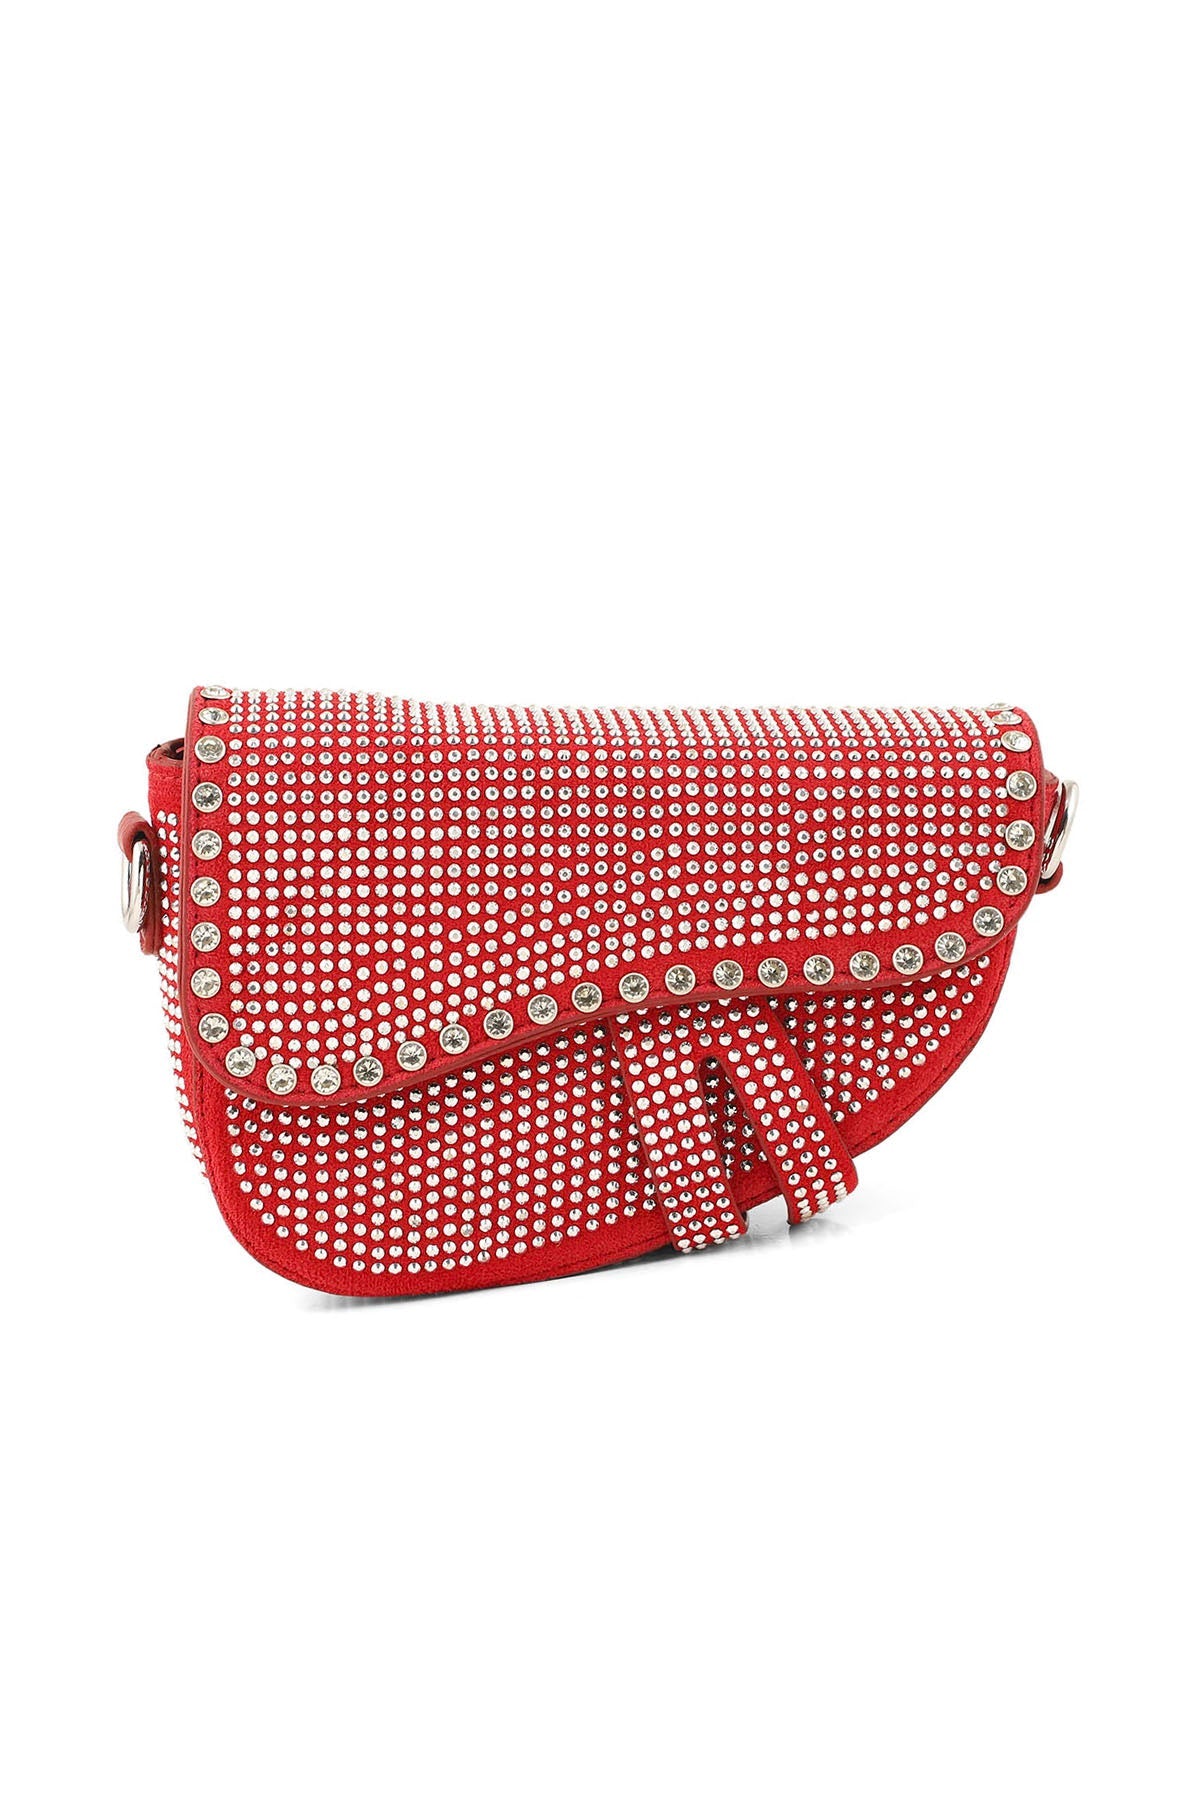 Cross Shoulder Bags B14961-Red